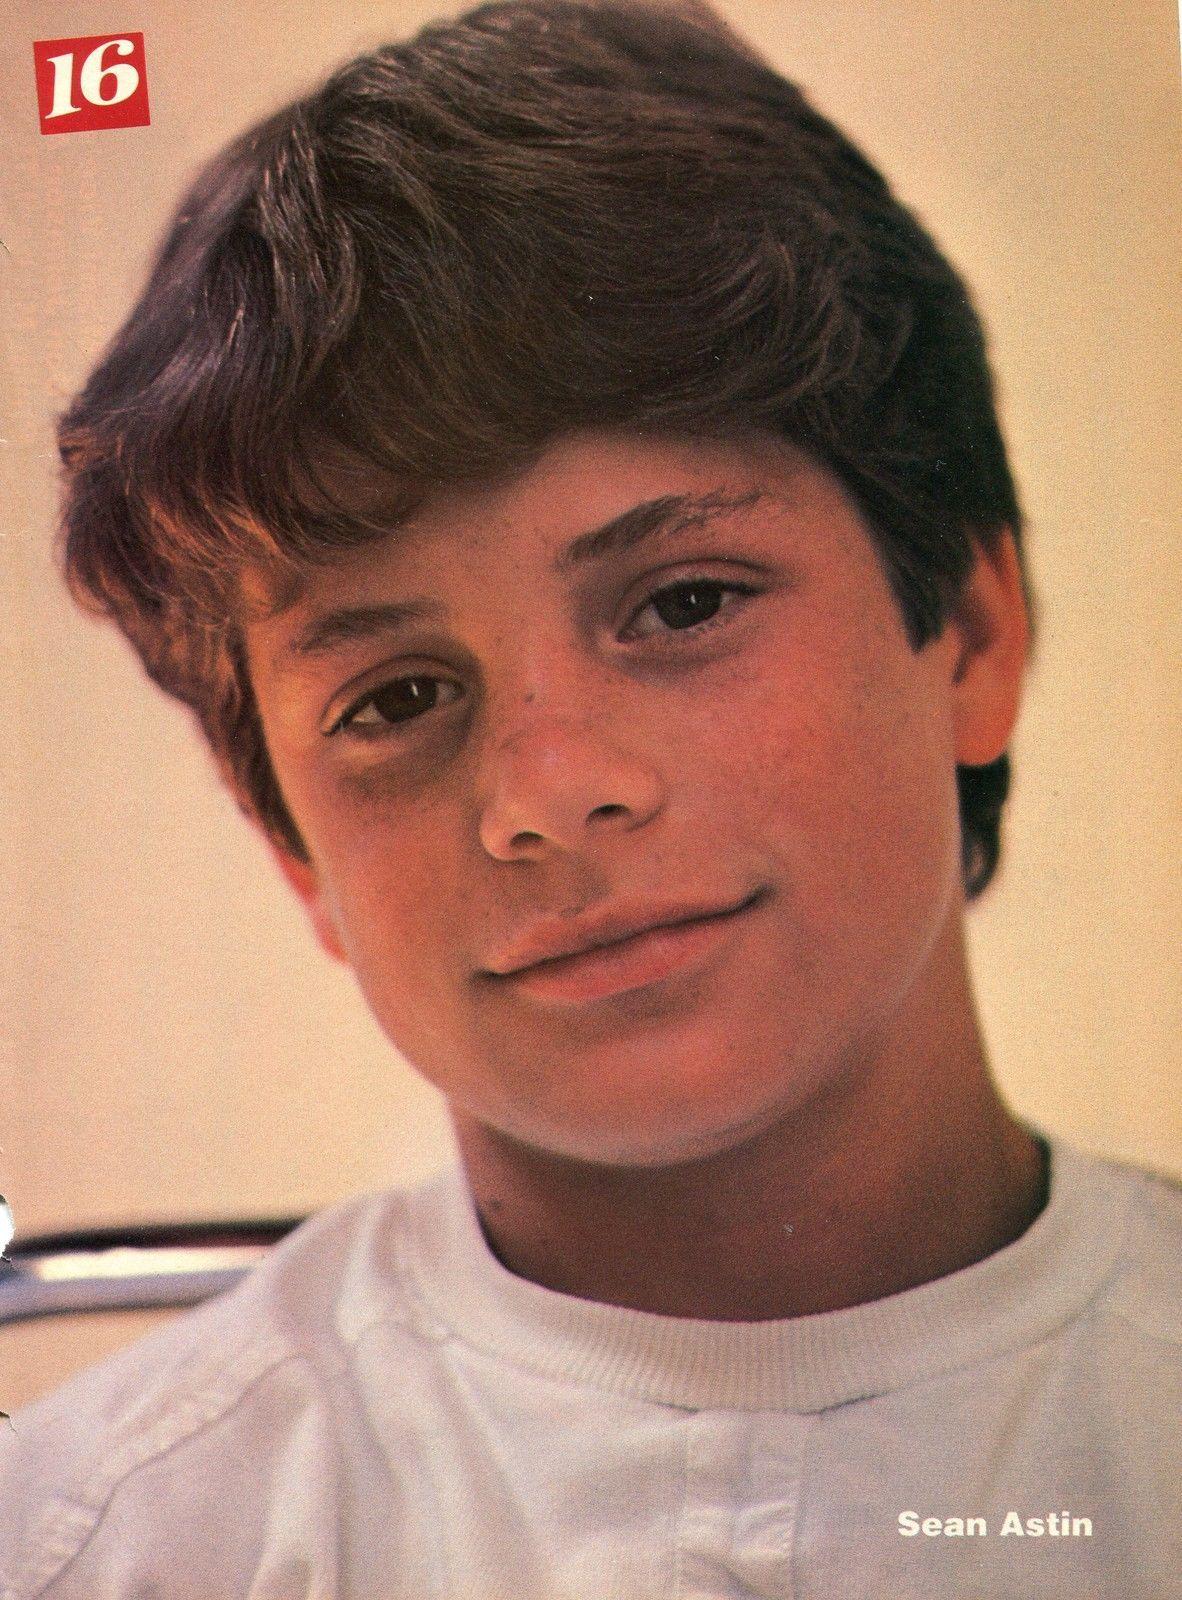 Sean Astin. Child Stars: A (Male, 1980's Now) In 2018